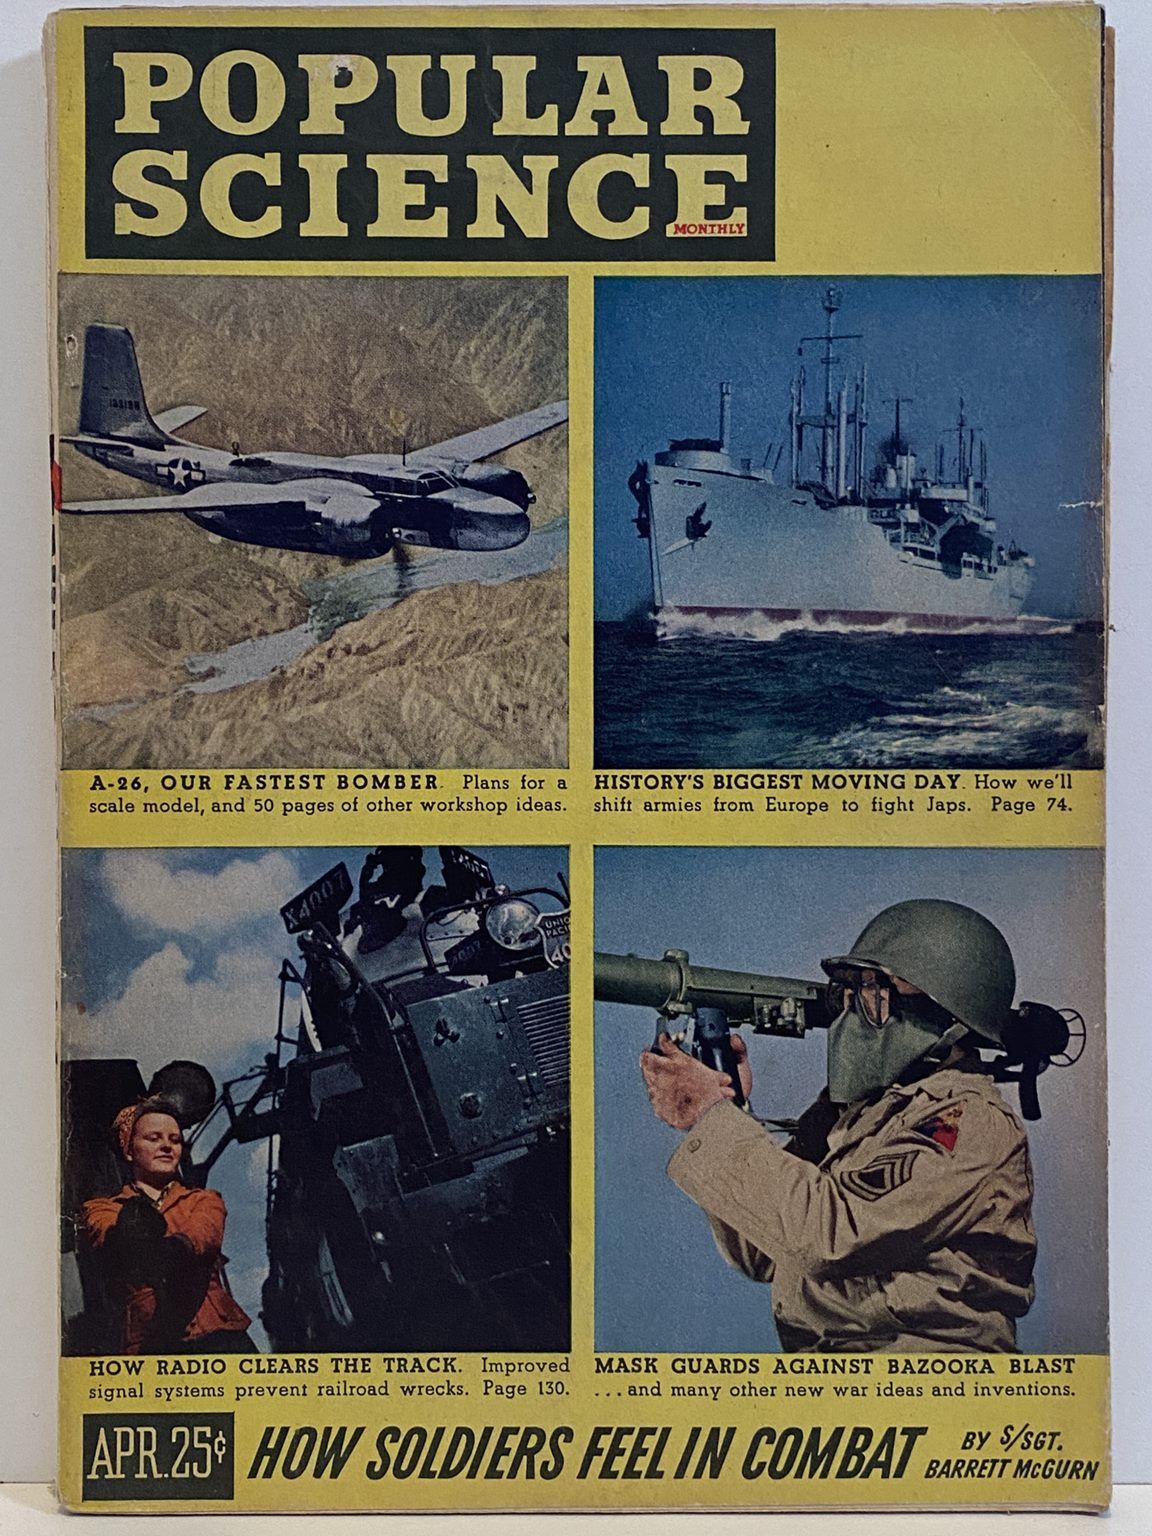 VINTAGE MAGAZINE: Popular Science, Vol. 146, No. 4 - February 1945